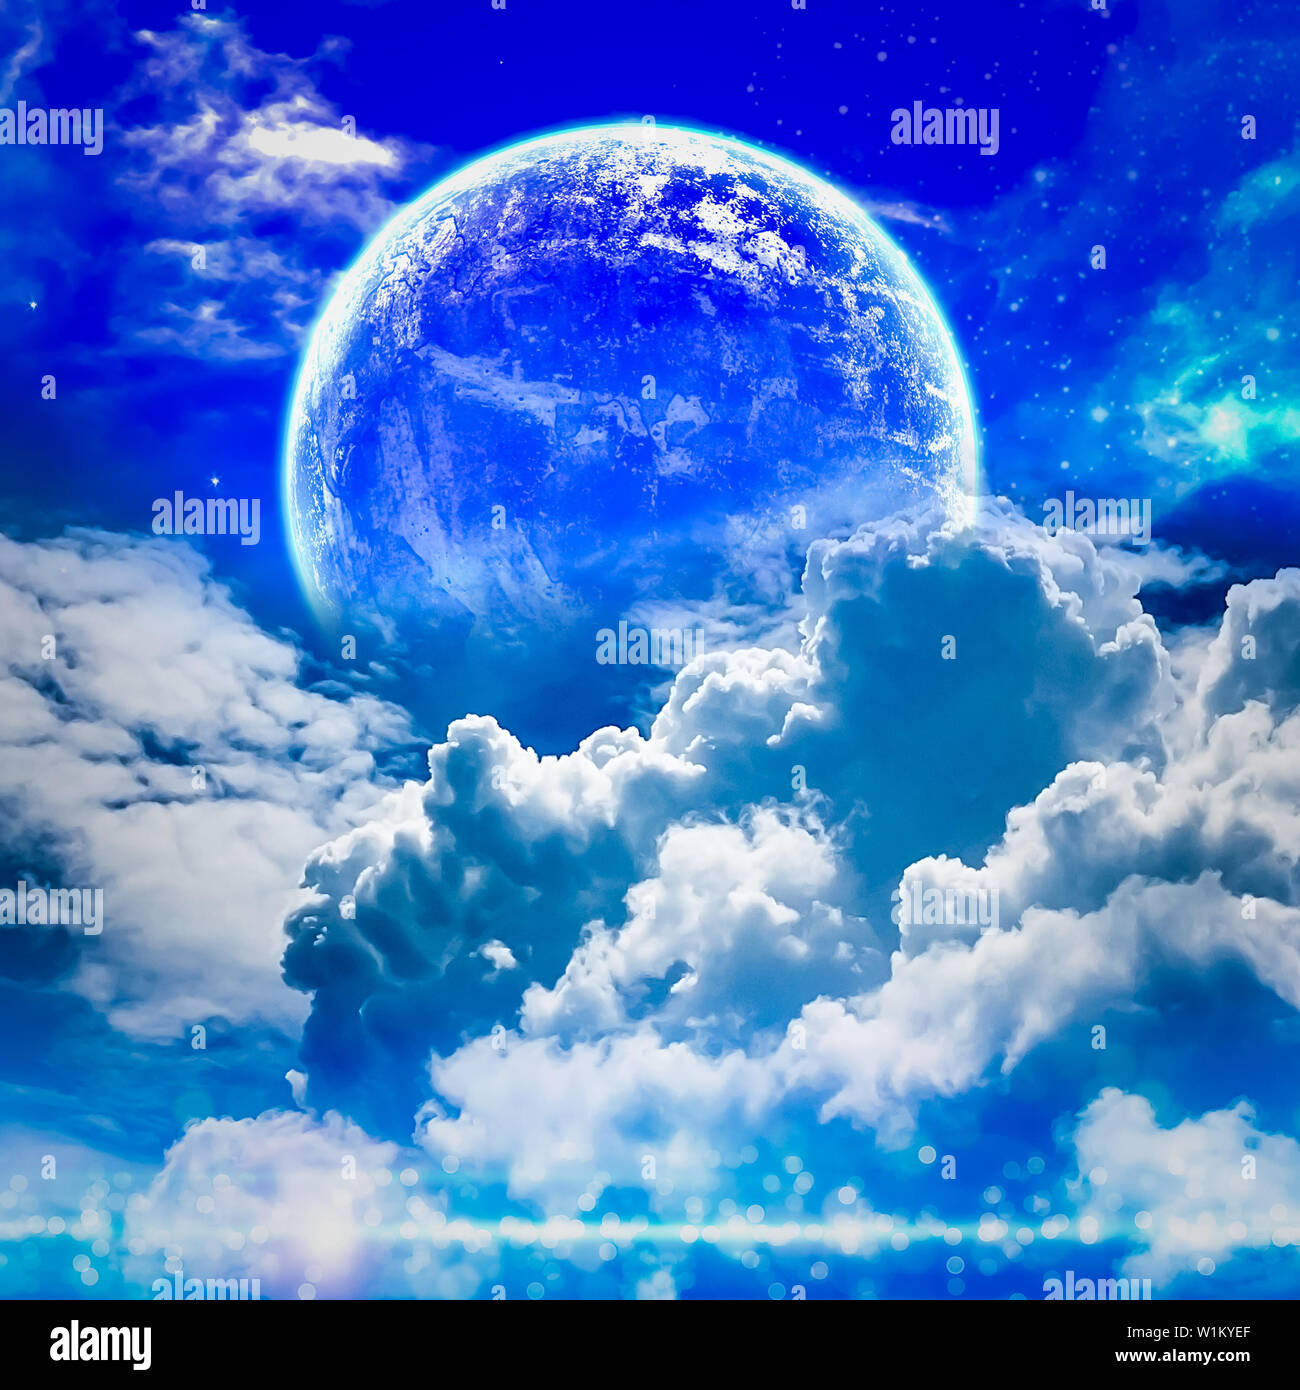 Download wallpaper 800x1420 moon, tree, starry sky, night, stars, dark  iphone se/5s/5c/5 for parallax hd background